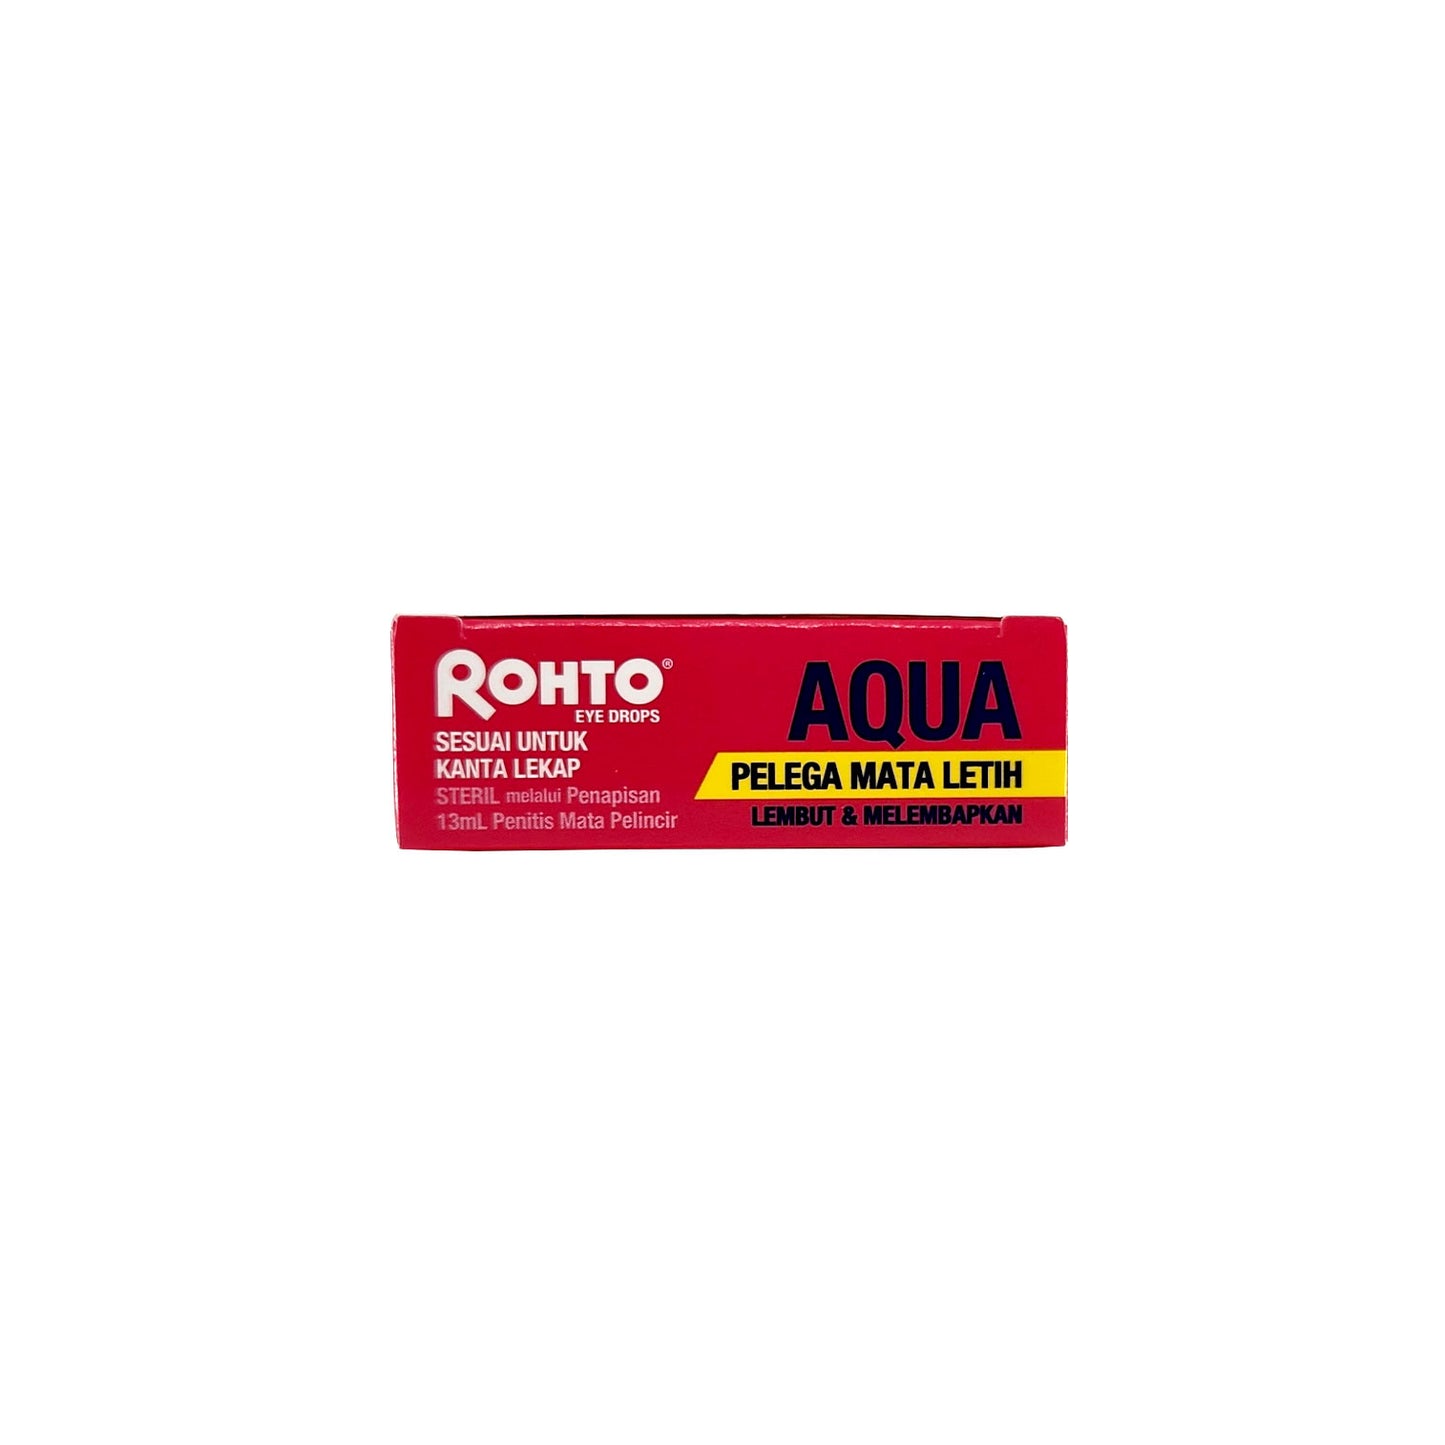 Rohto Eye Drops Aqua 13ml